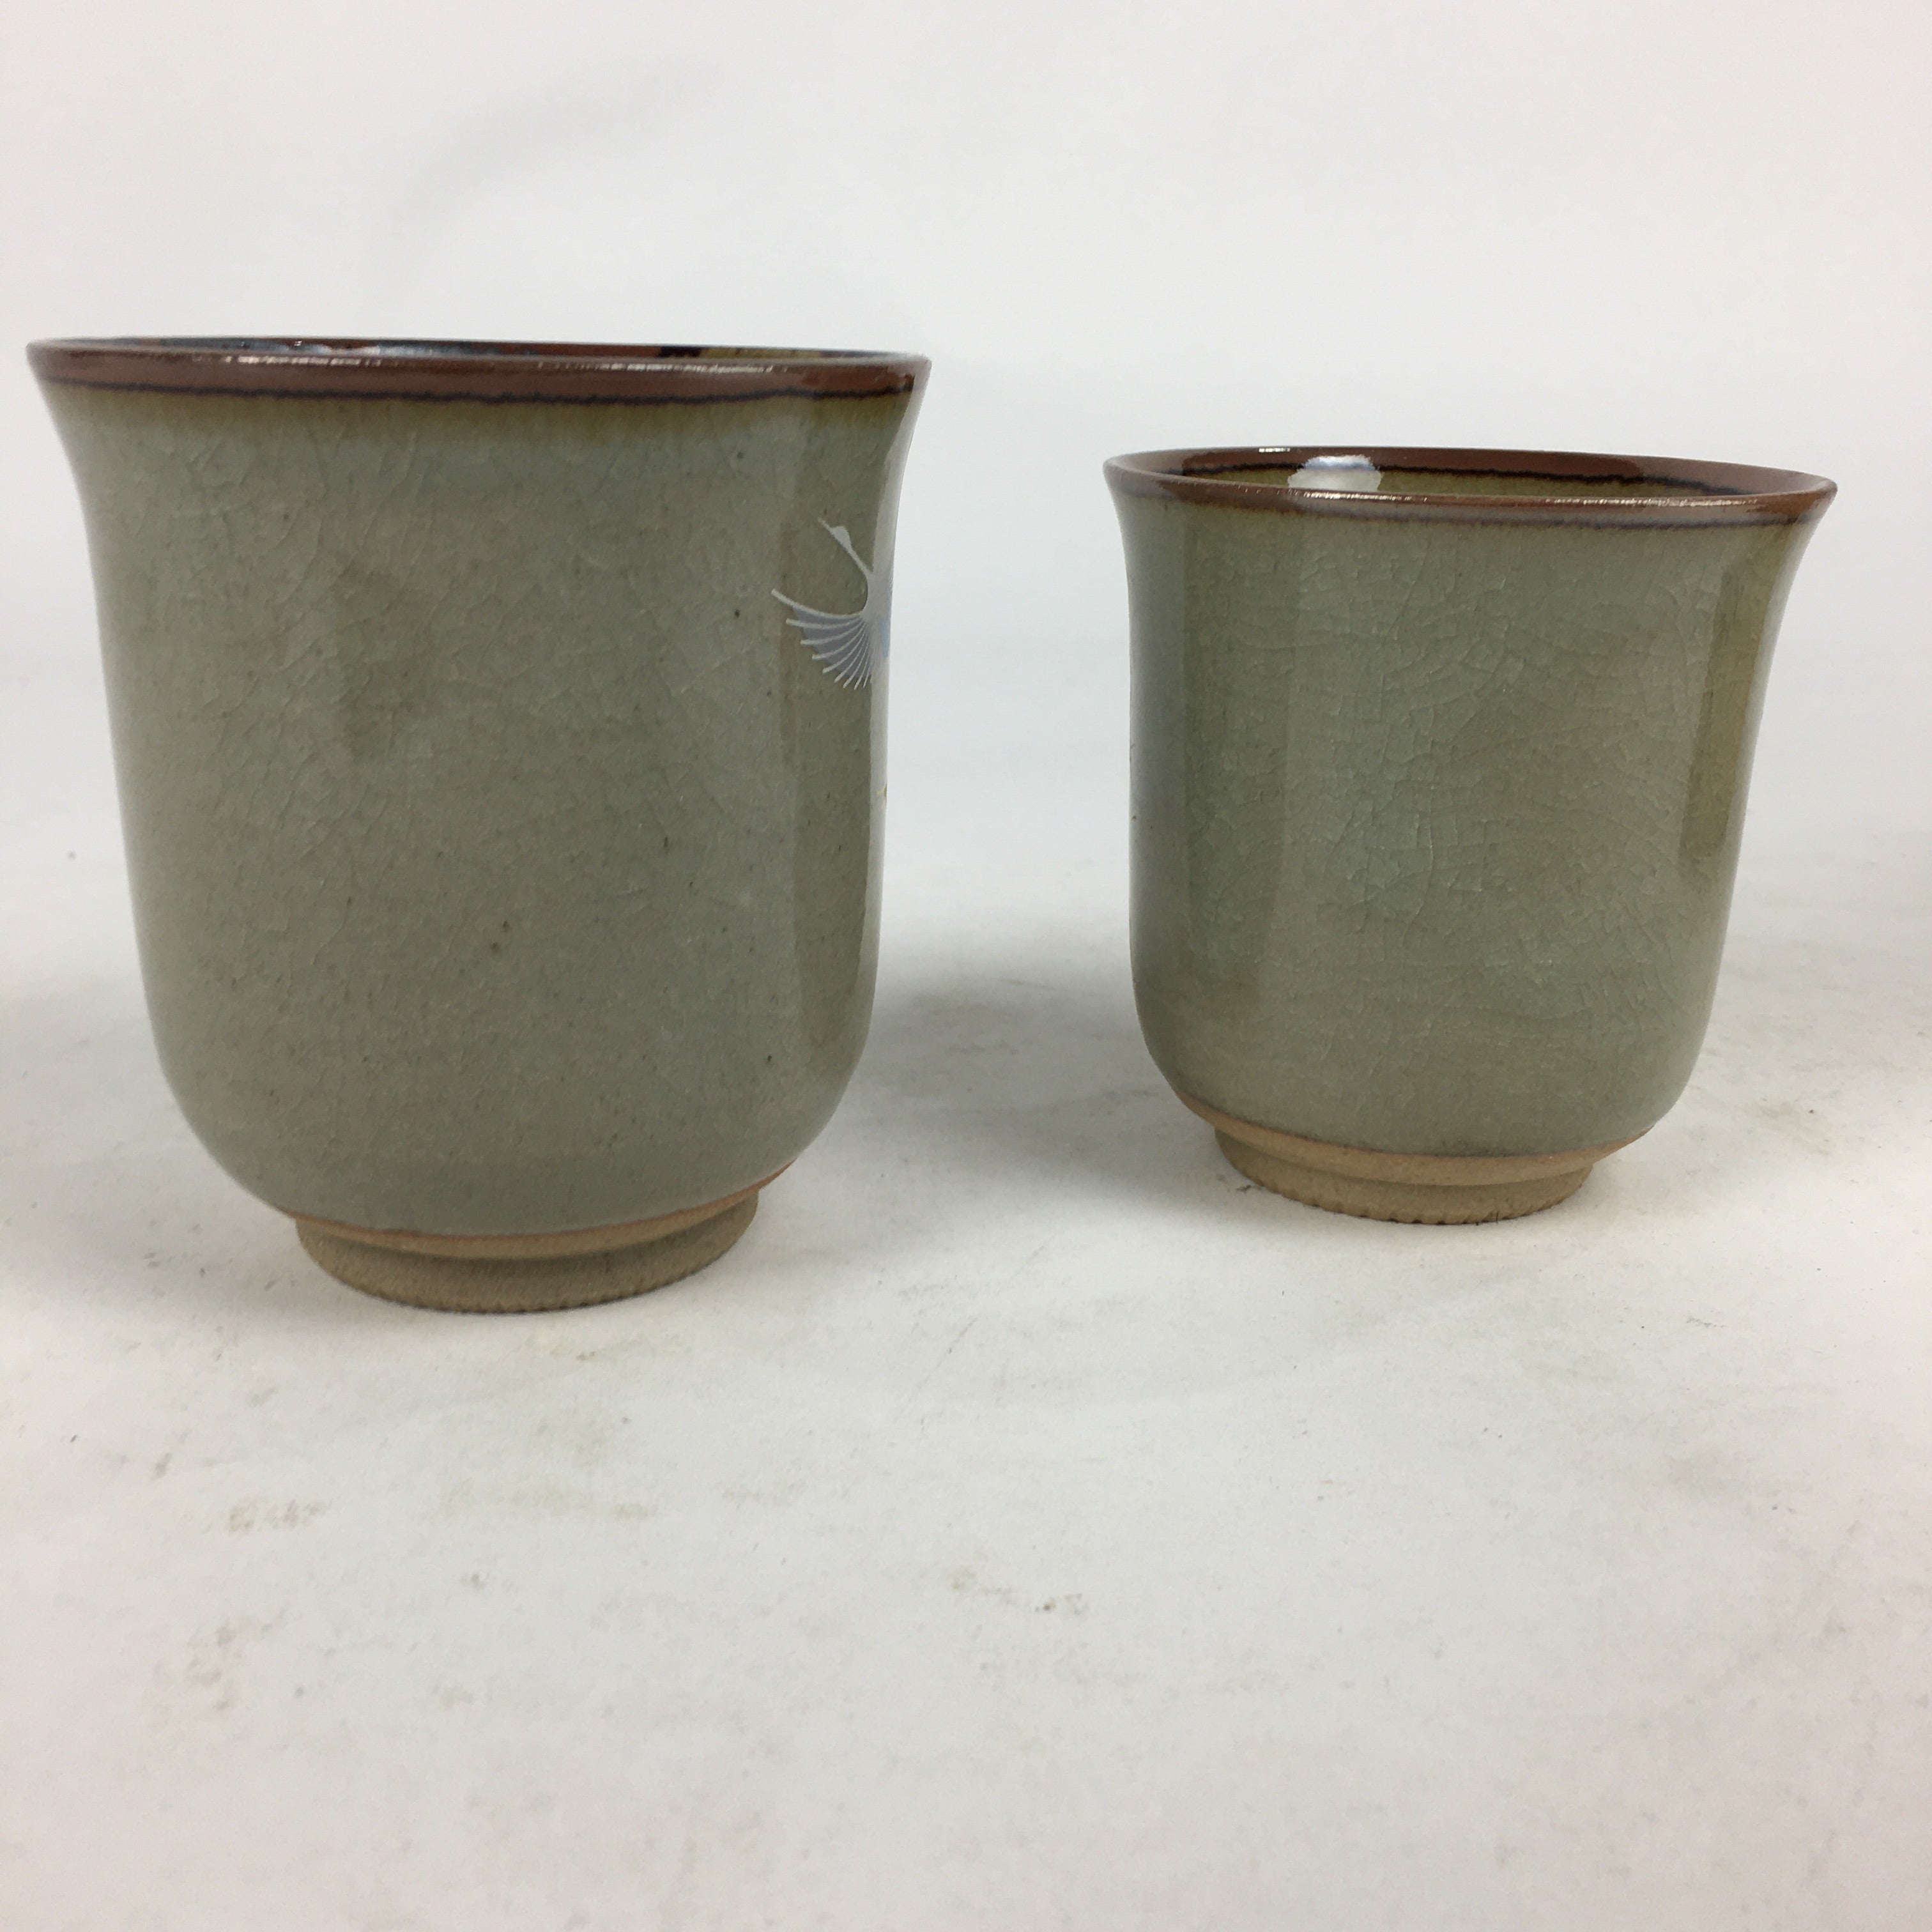 Japanese Ceramic Teacup 2pc Pair Vtg Boxed Pottery Yunomi Sencha PX581